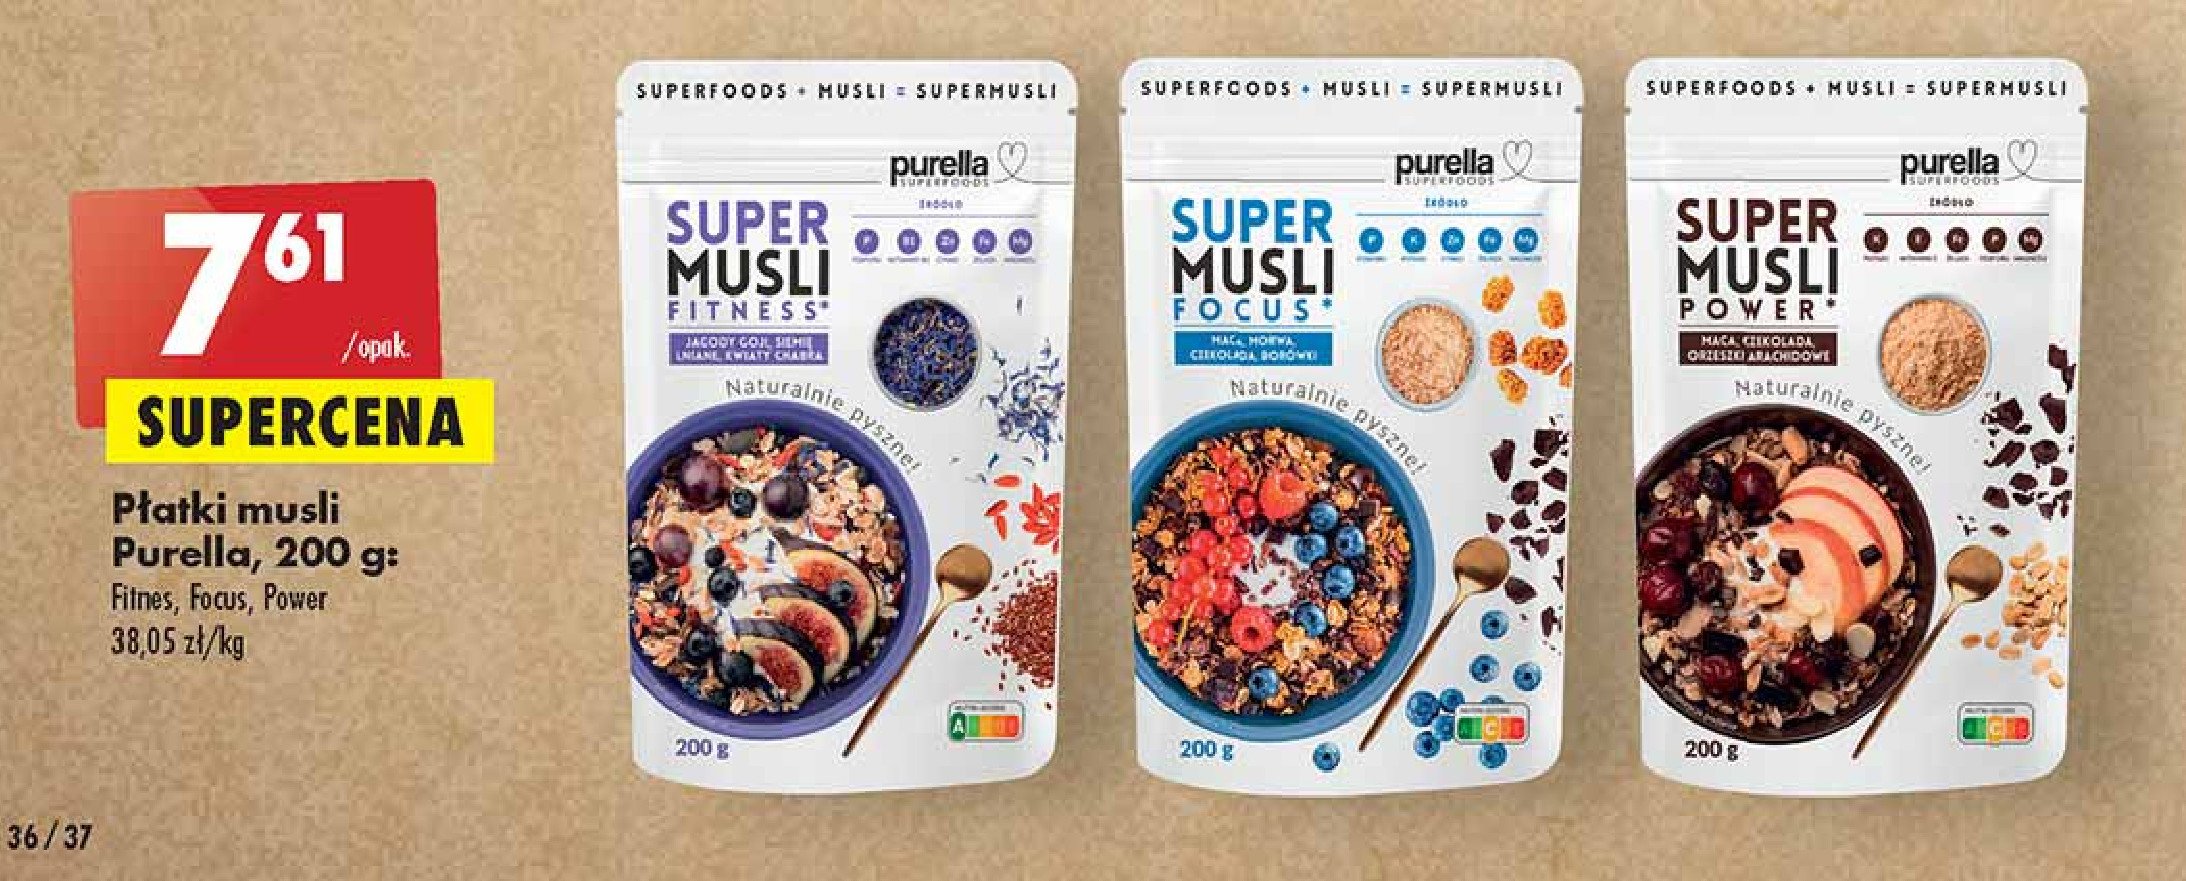 Musli fitness Purella super musli Purella food promocja